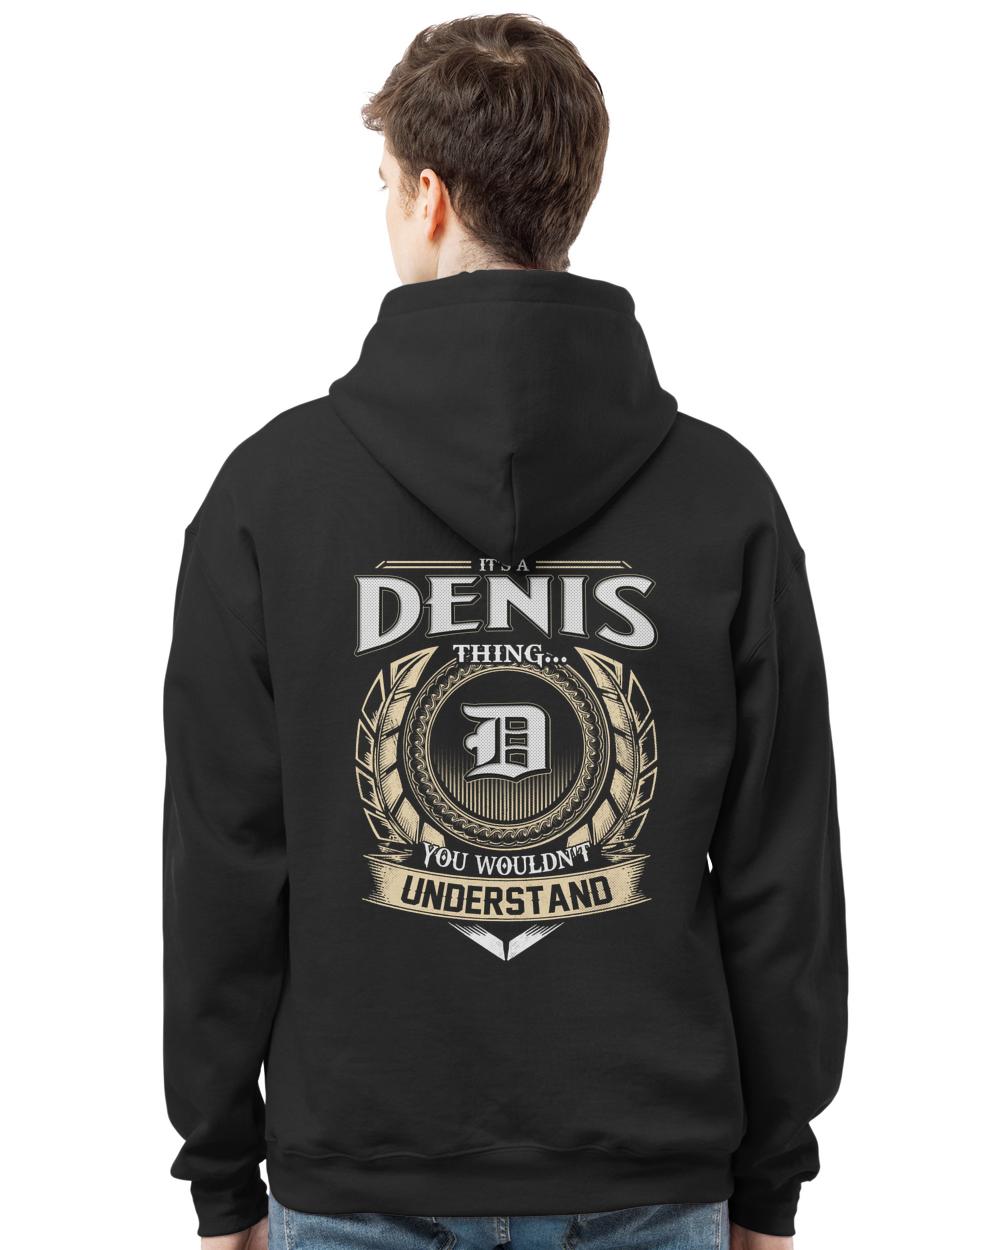 DENIS-13K-46-01